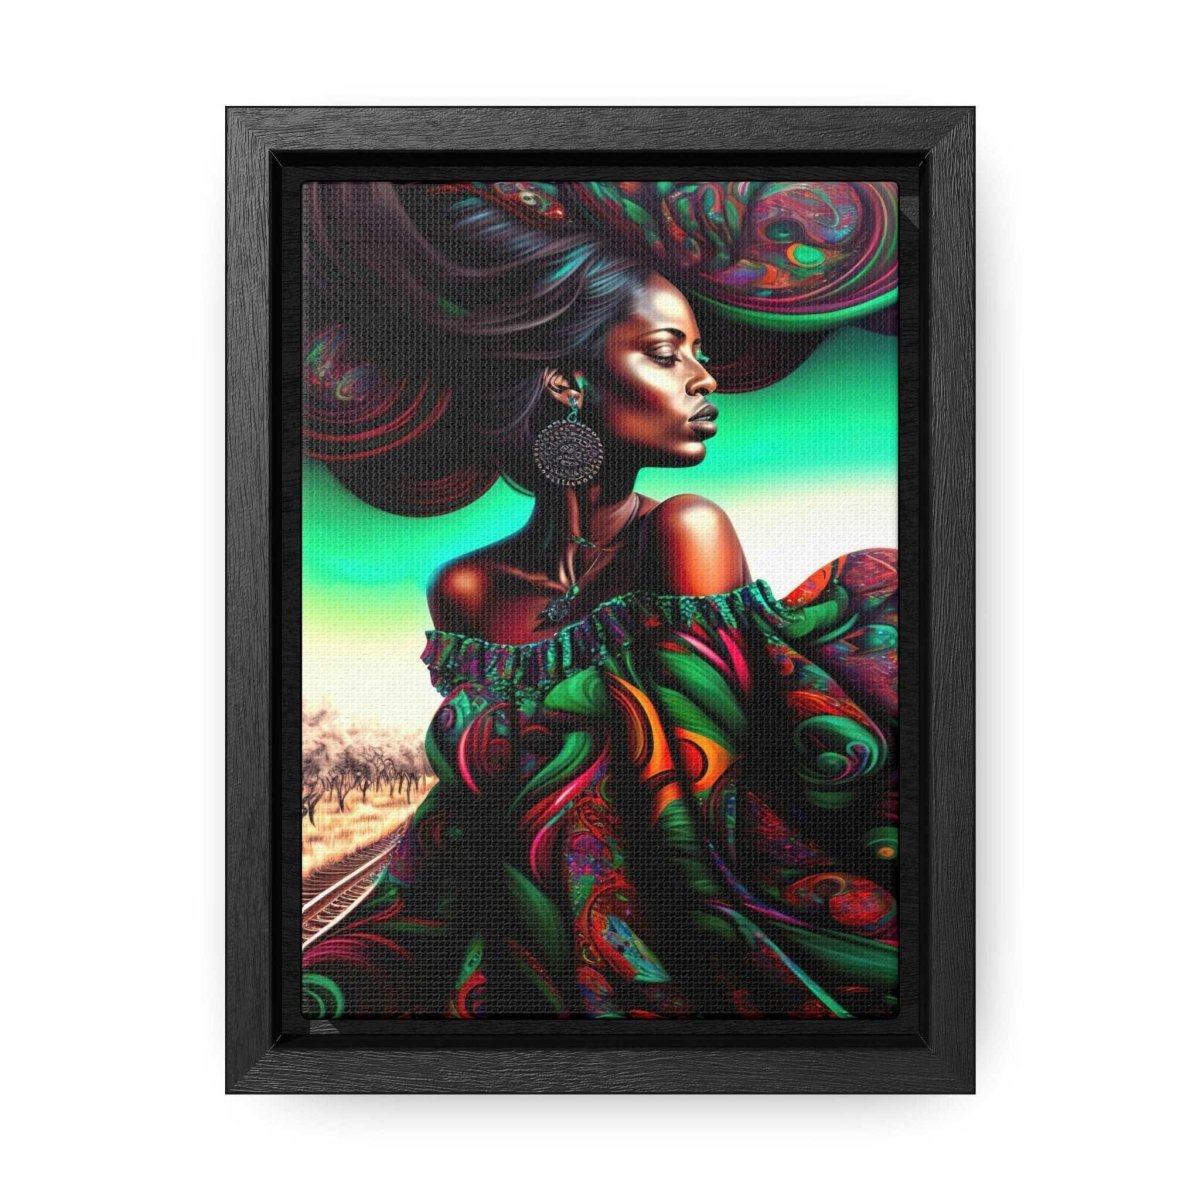 Beautiful Indian Woman Digital Abstract Art Framed - HigherFrequencies